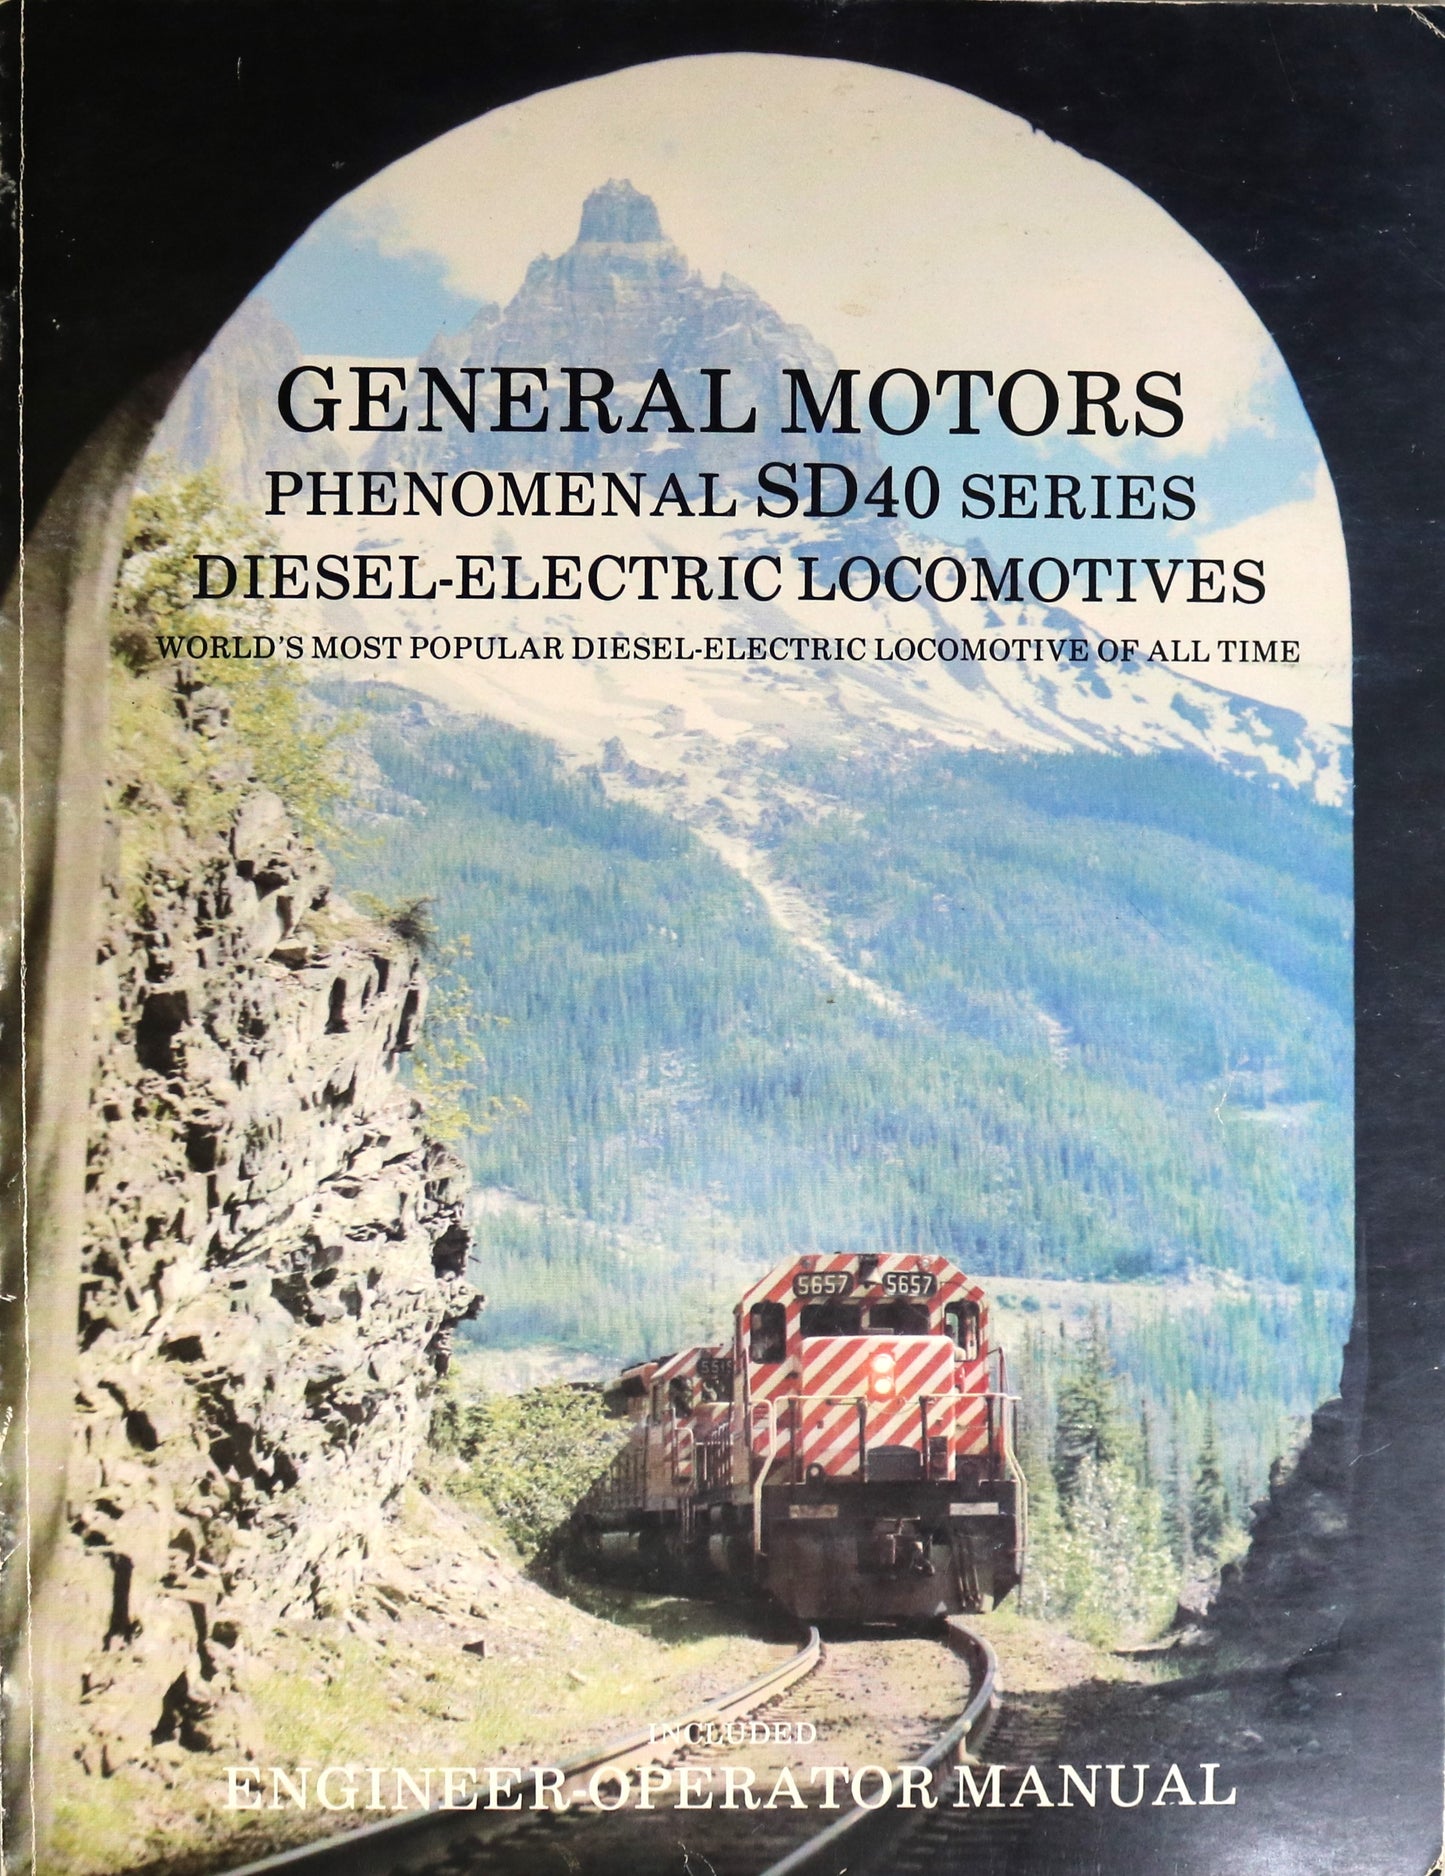 General Motors Phenomenal Diesel-Electric Locomotives Railway Railroad History Book